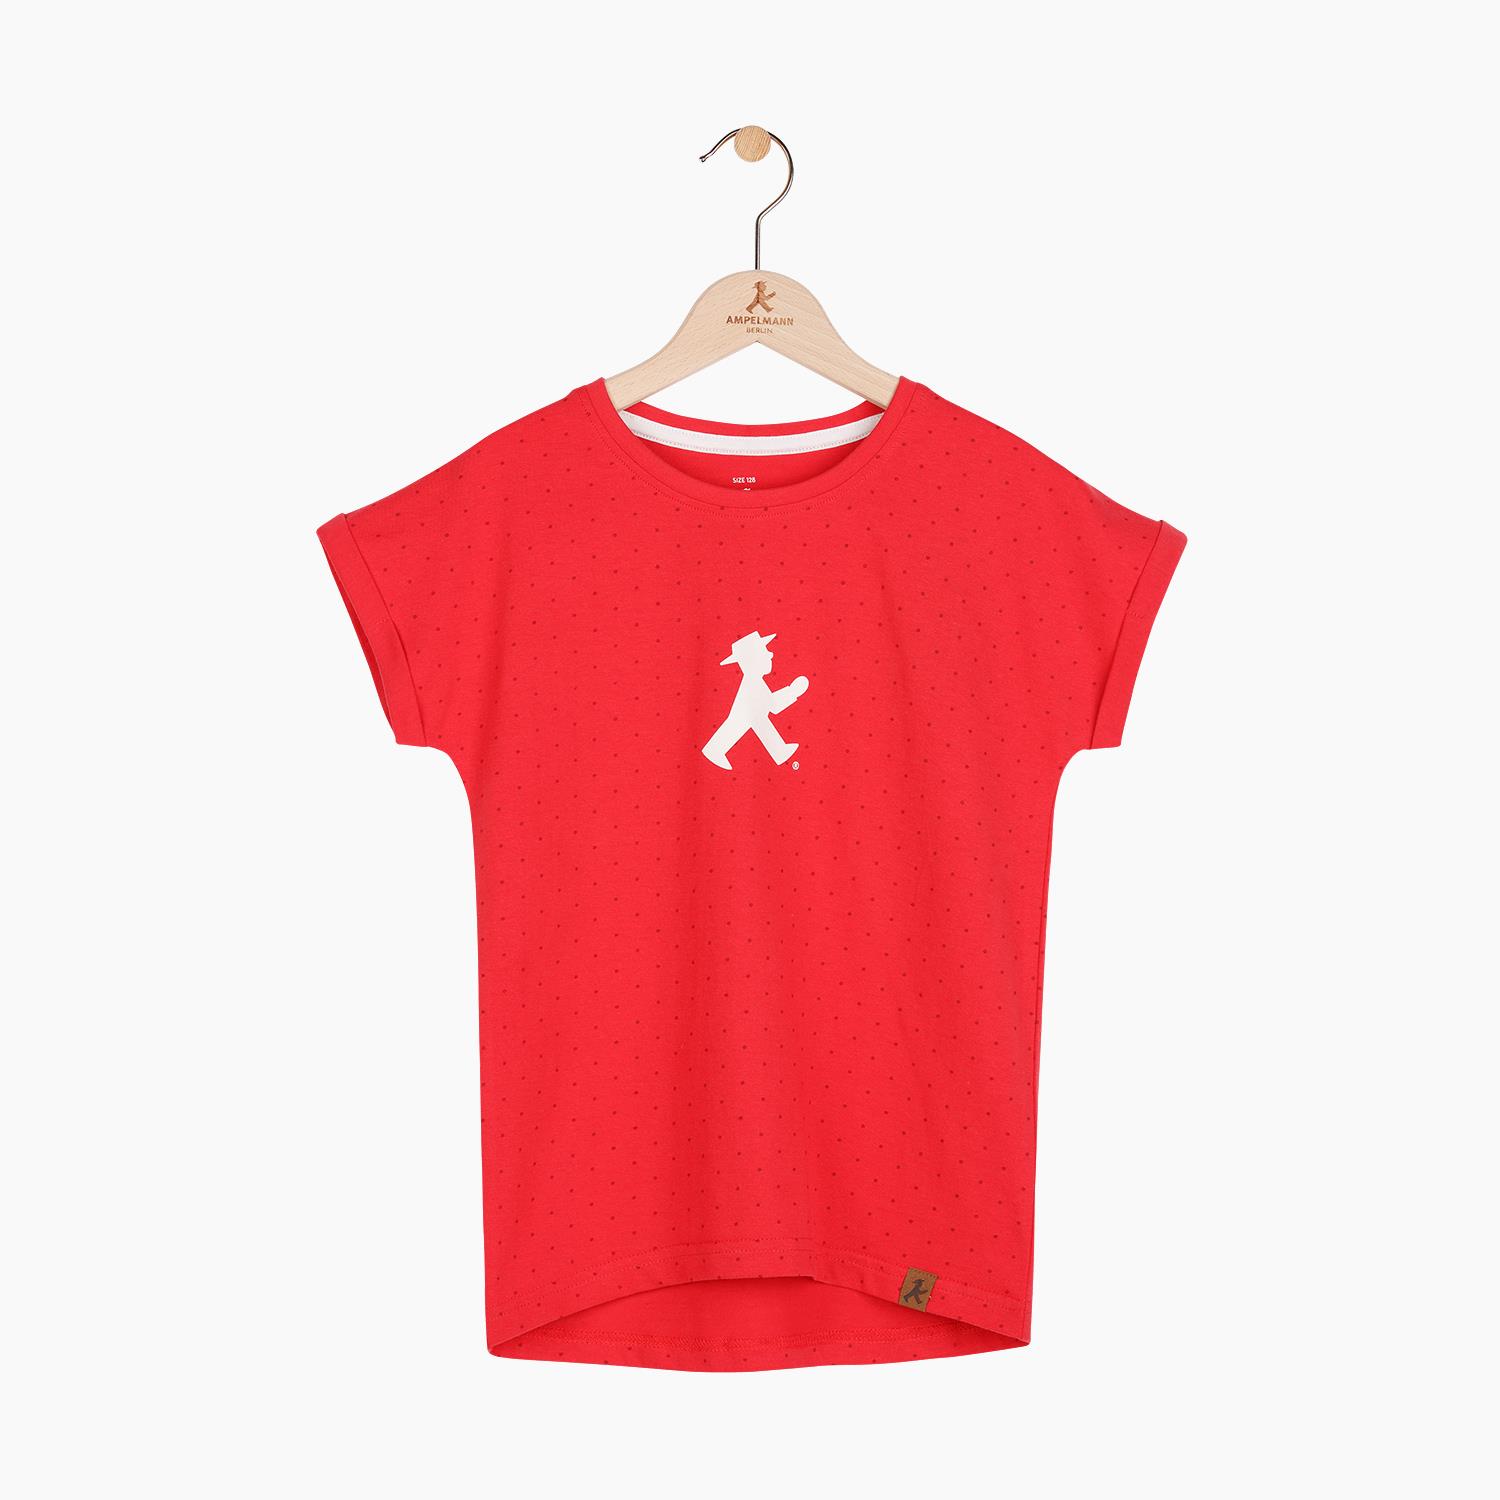 HERZCHEN 140/ Kids T-Shirt